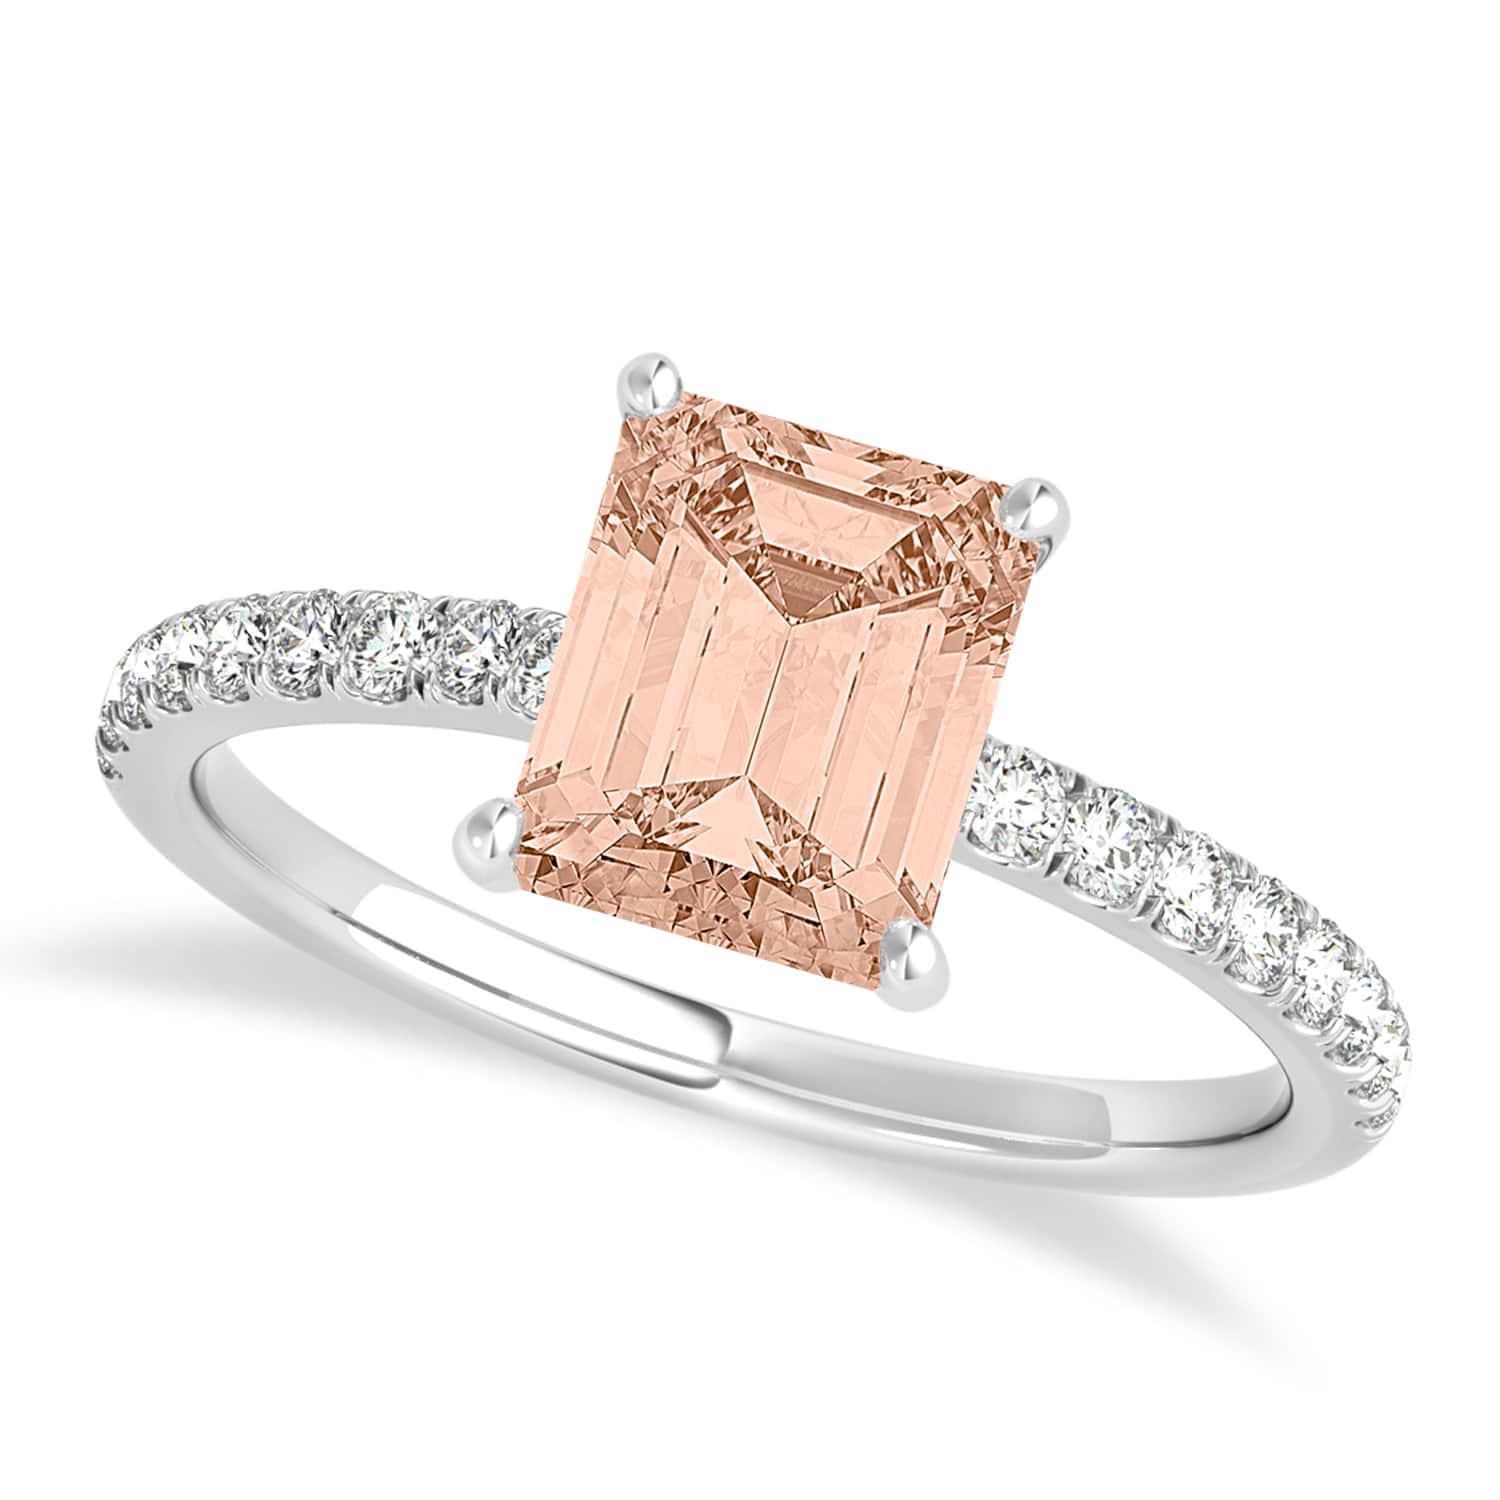 Emerald Morganite & Diamond Single Row Hidden Halo Engagement Ring 14k White Gold (1.31ct)